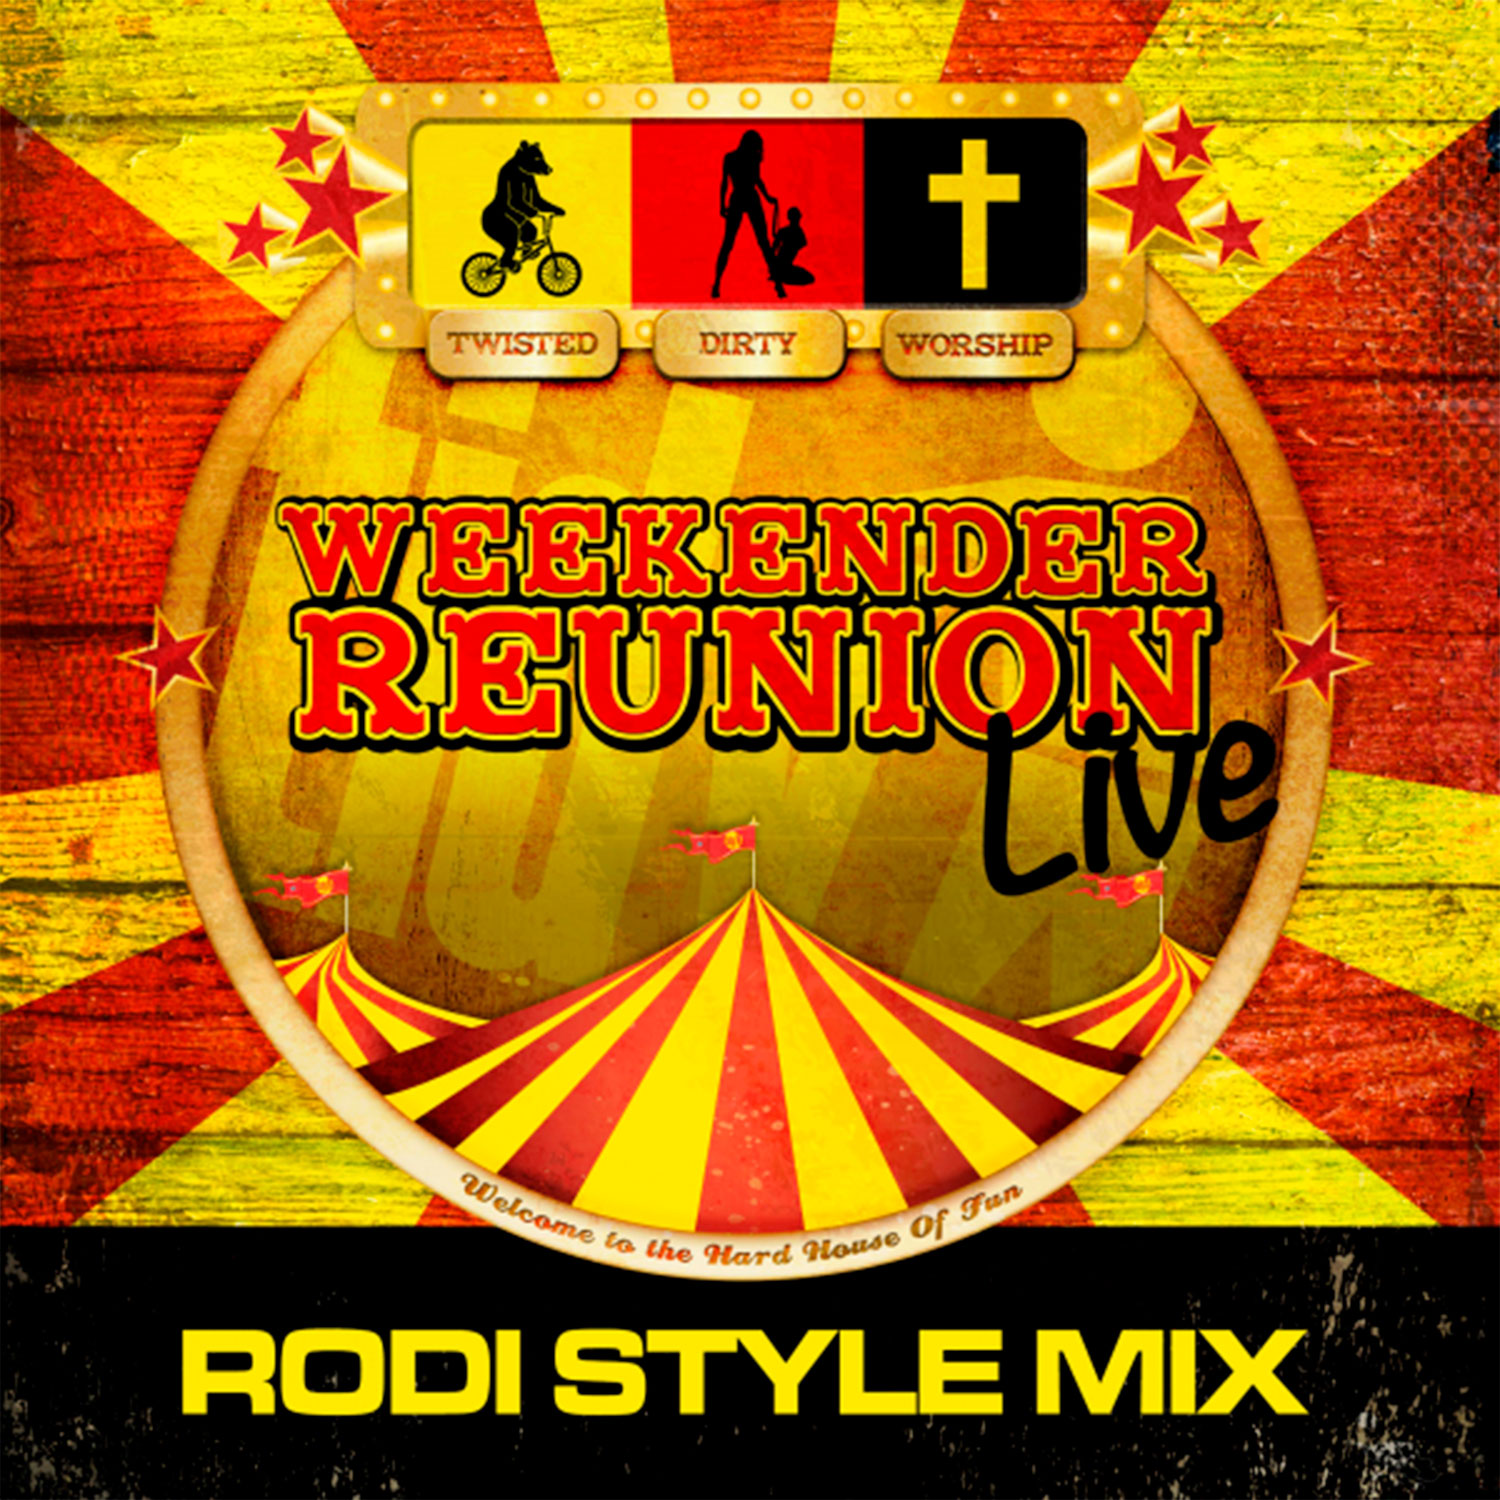 Tidy Weekender Reunion Live - Rodi Style